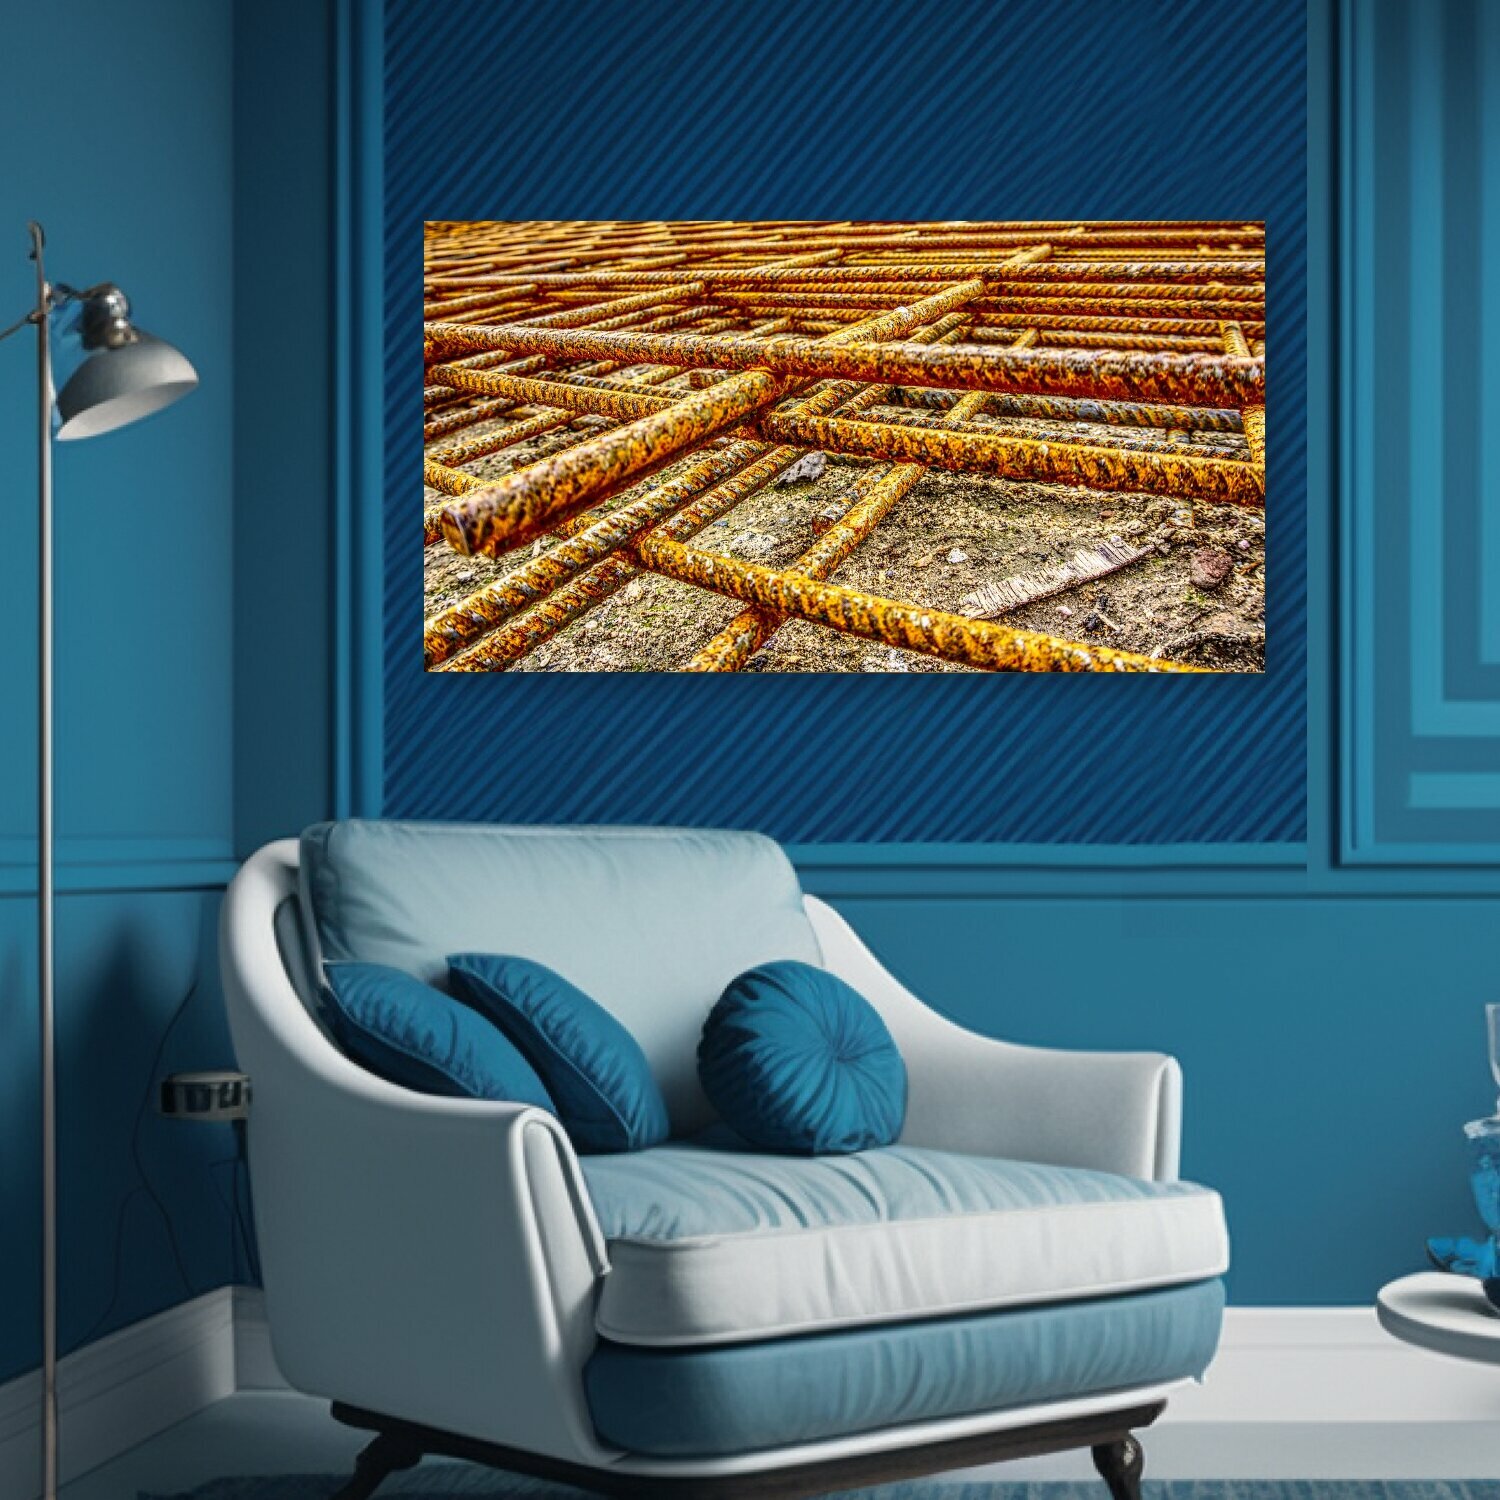 Картина на холсте "Перила железа, сетка, мат" на подрамнике 75х40 см. для интерьера